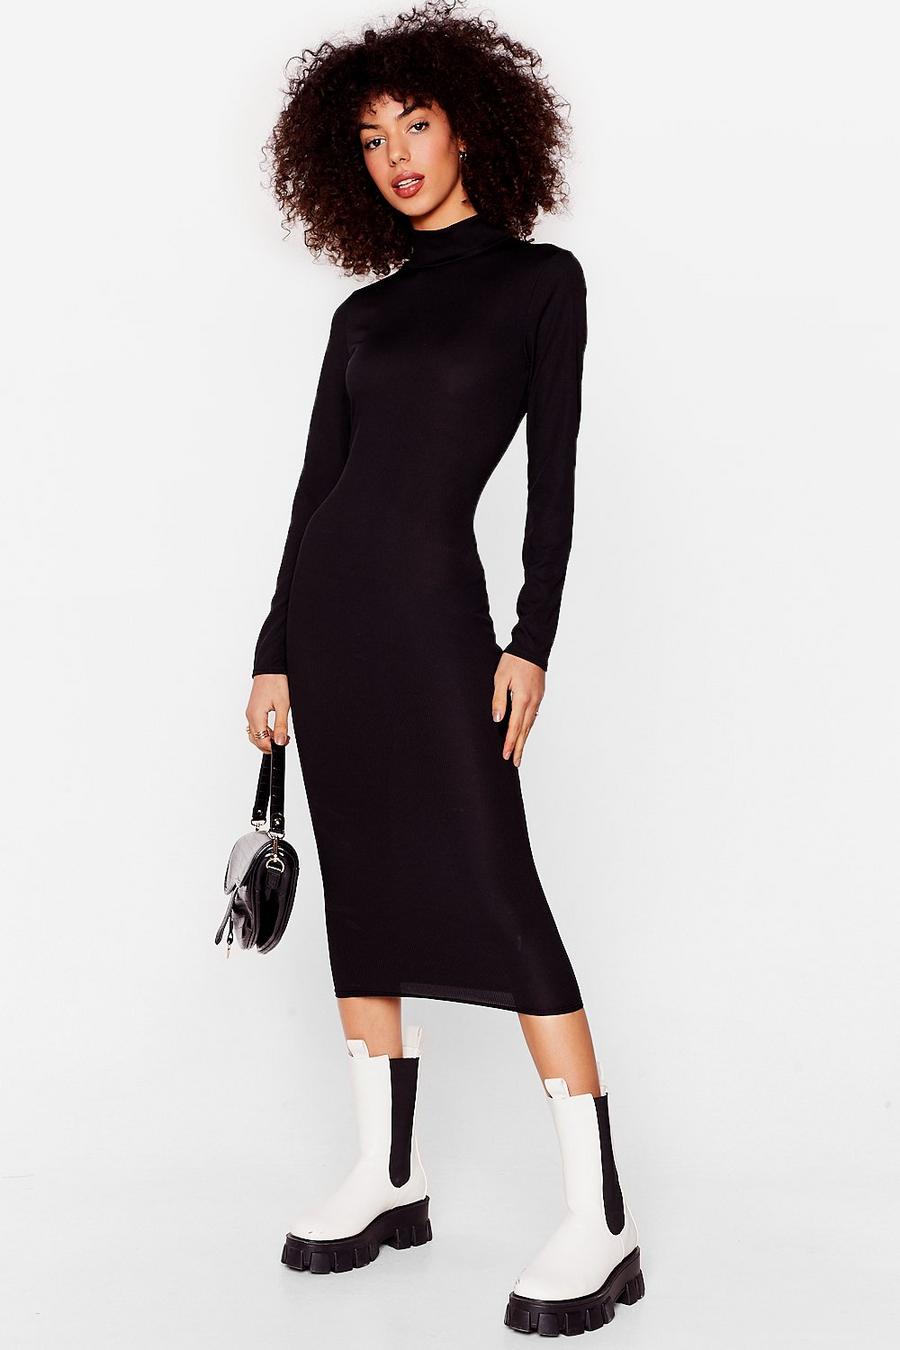 Black Long Sleeve High Neck Bodycon Midi Dress